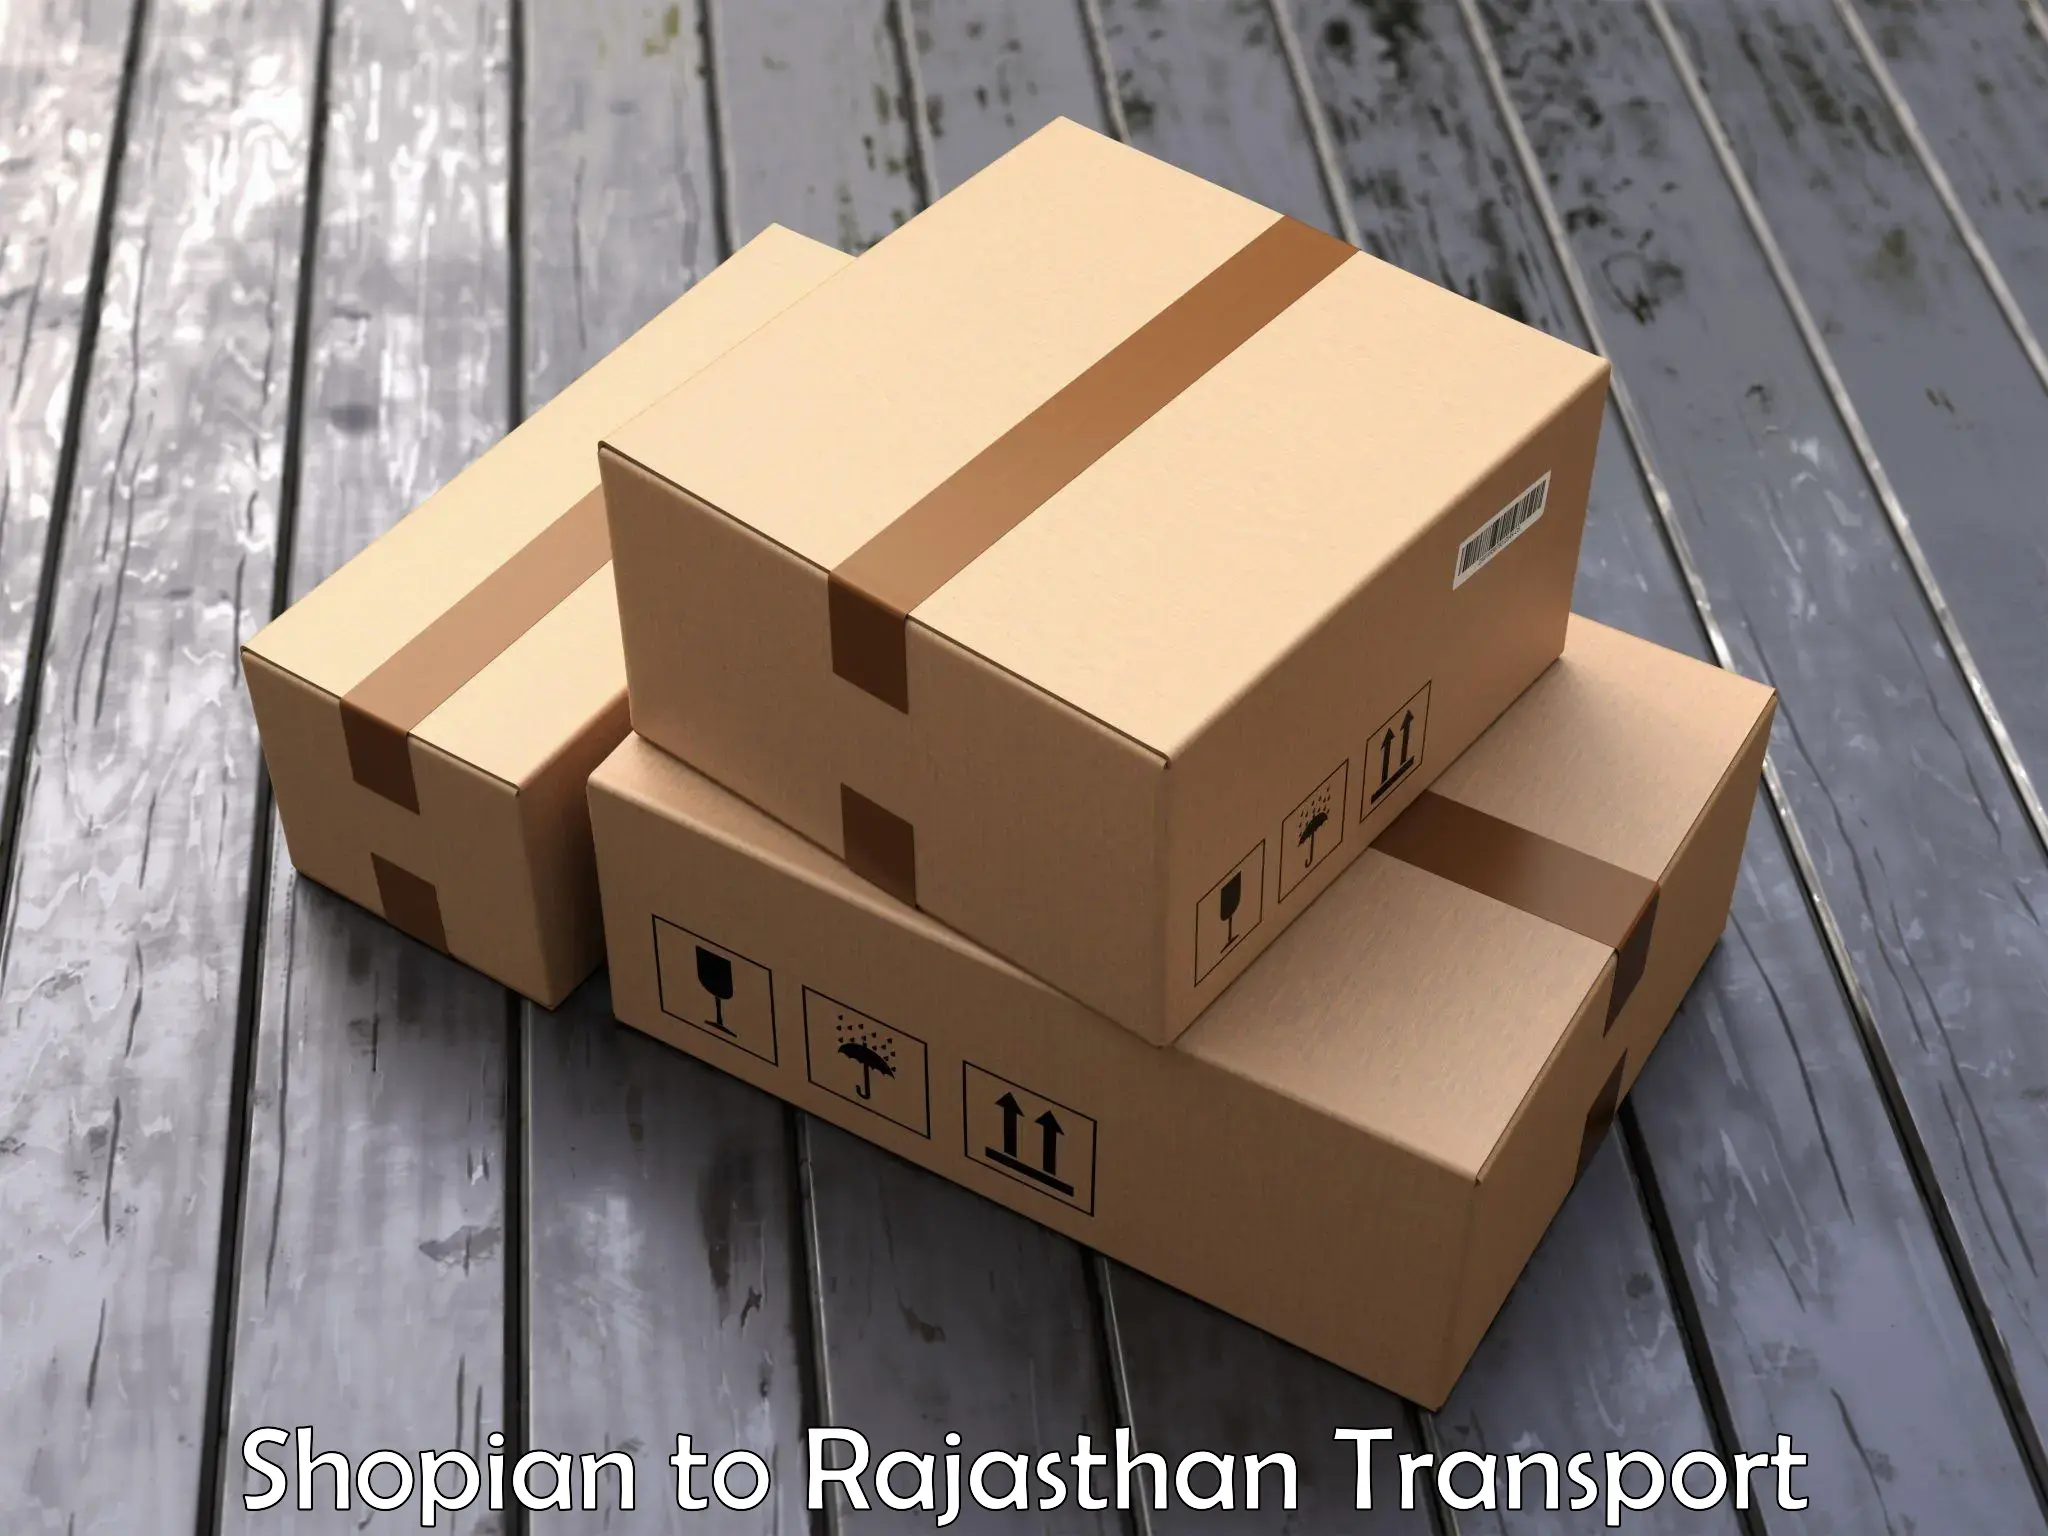 Truck transport companies in India Shopian to Dudu